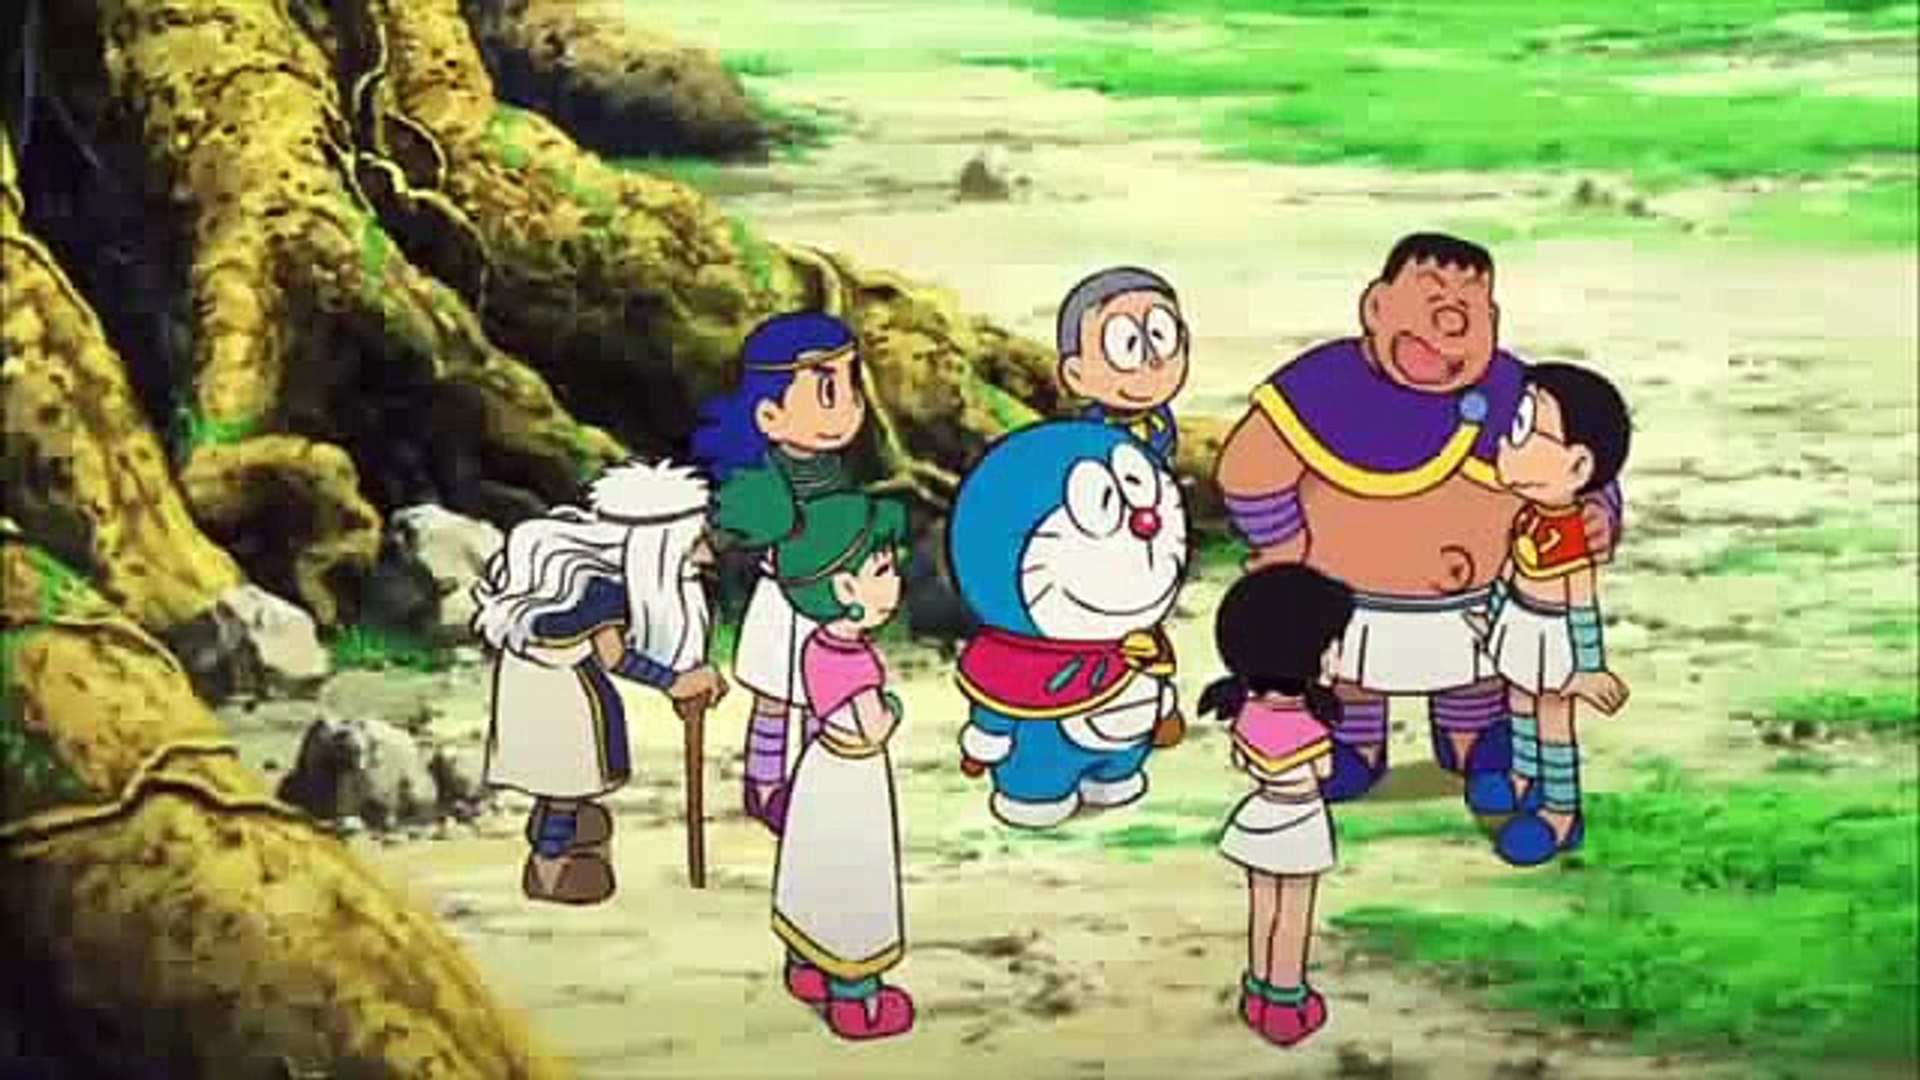 Doraemon The Movie (2012)